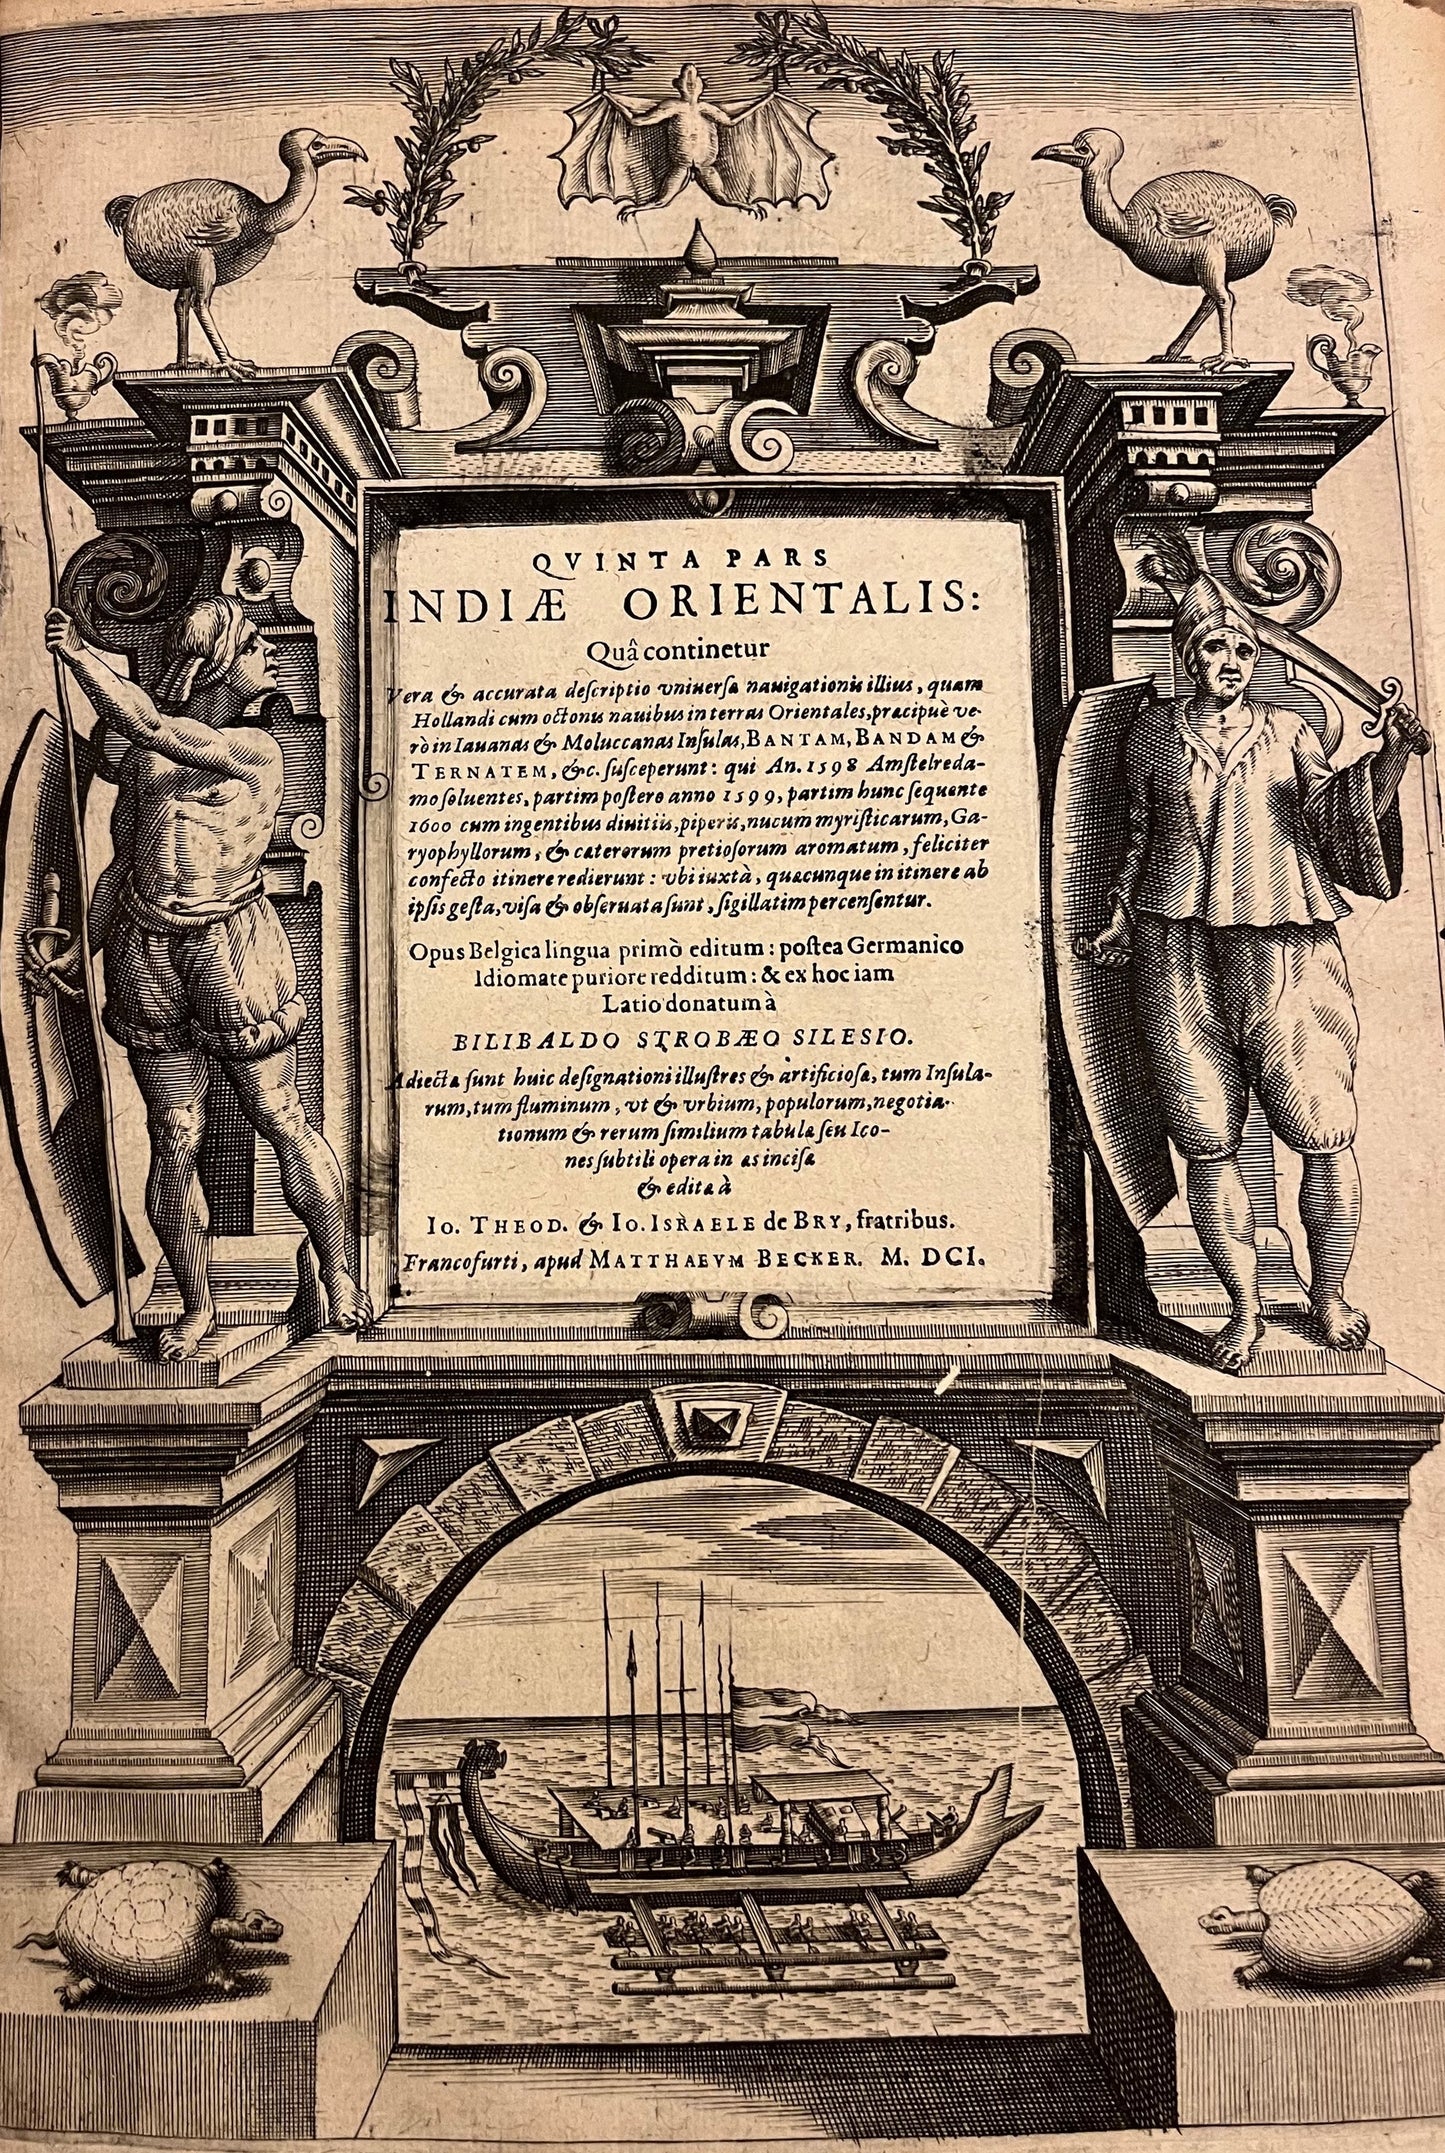 Pars Quarta Indiae Orientalis AND Quinta Pars Indiae Orientalis - Part 4 and 5 Petits Voyages - De Bry - Linschoten, Houtman, Van Neck